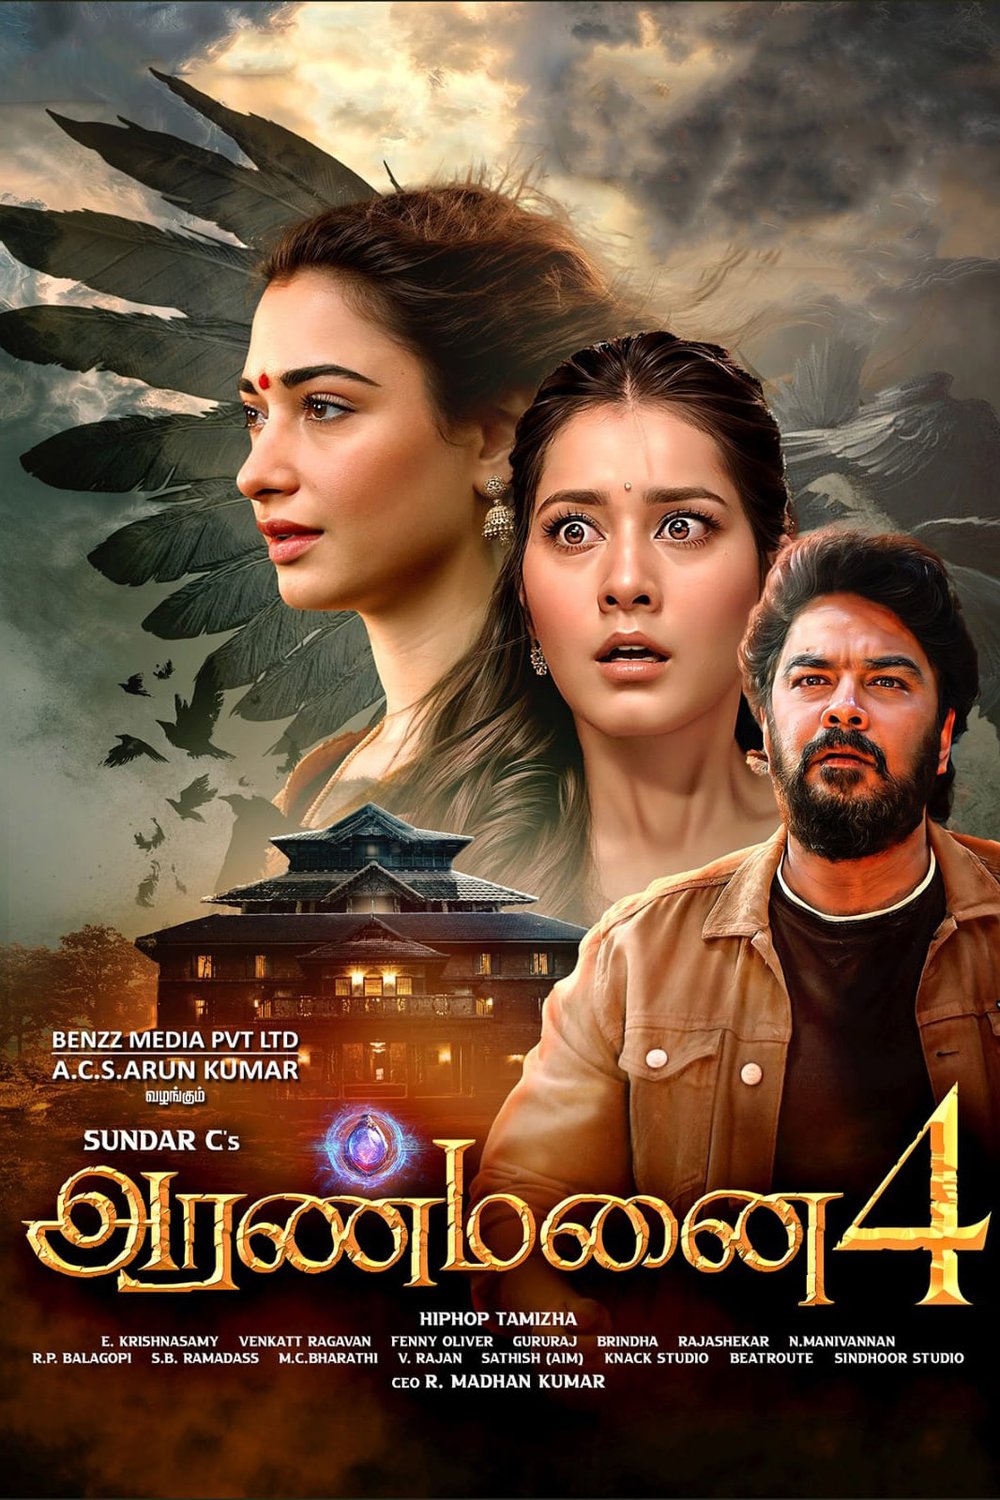 Tamil poster of the movie Aranmanai 4